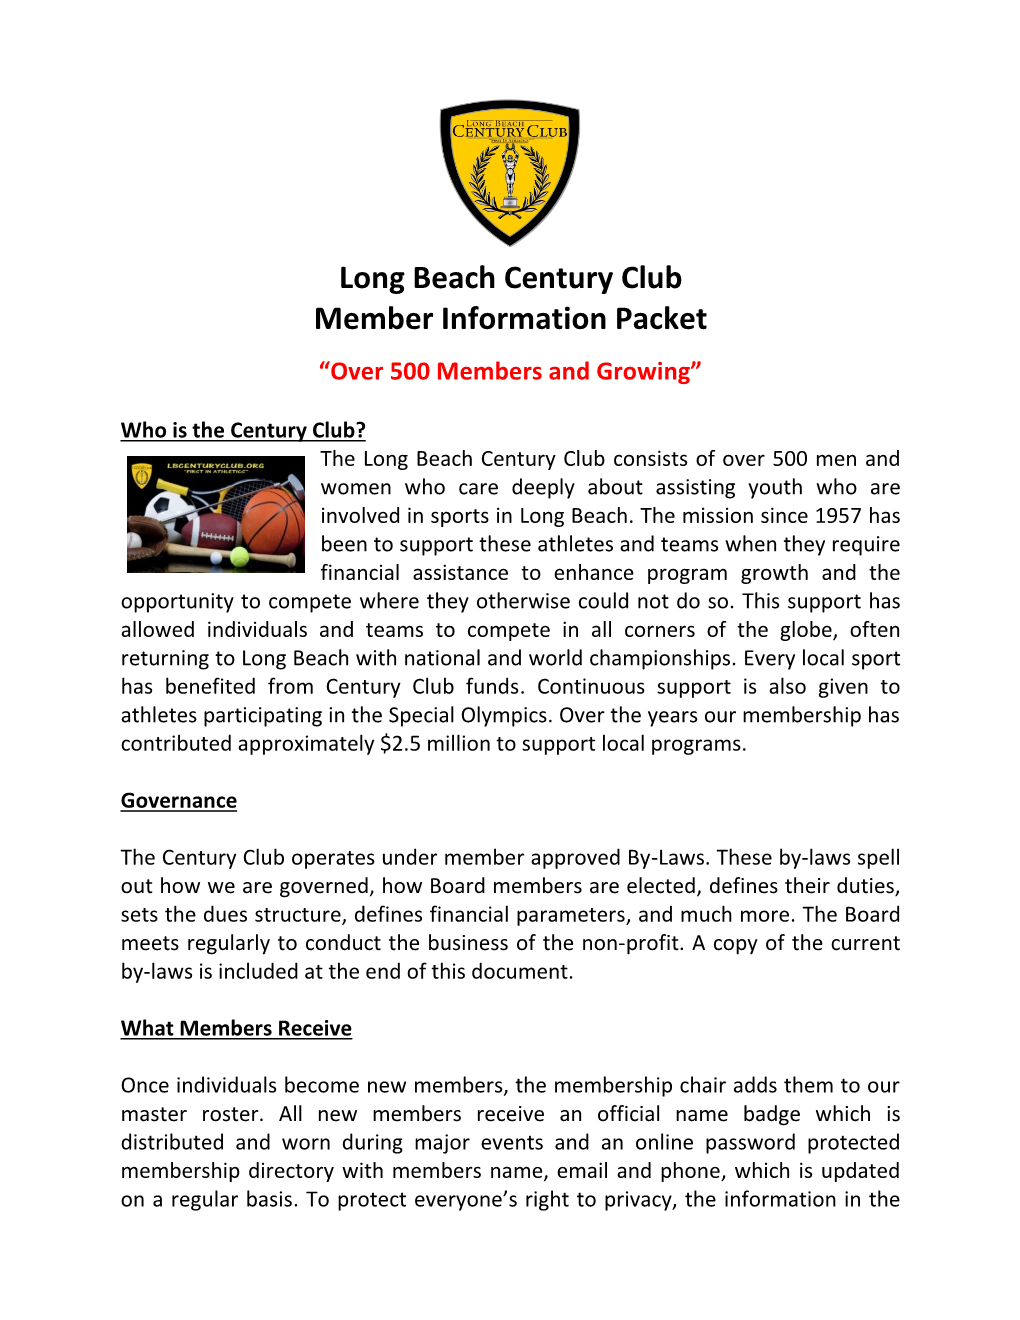 Long Beach Century Club Member Information Packet